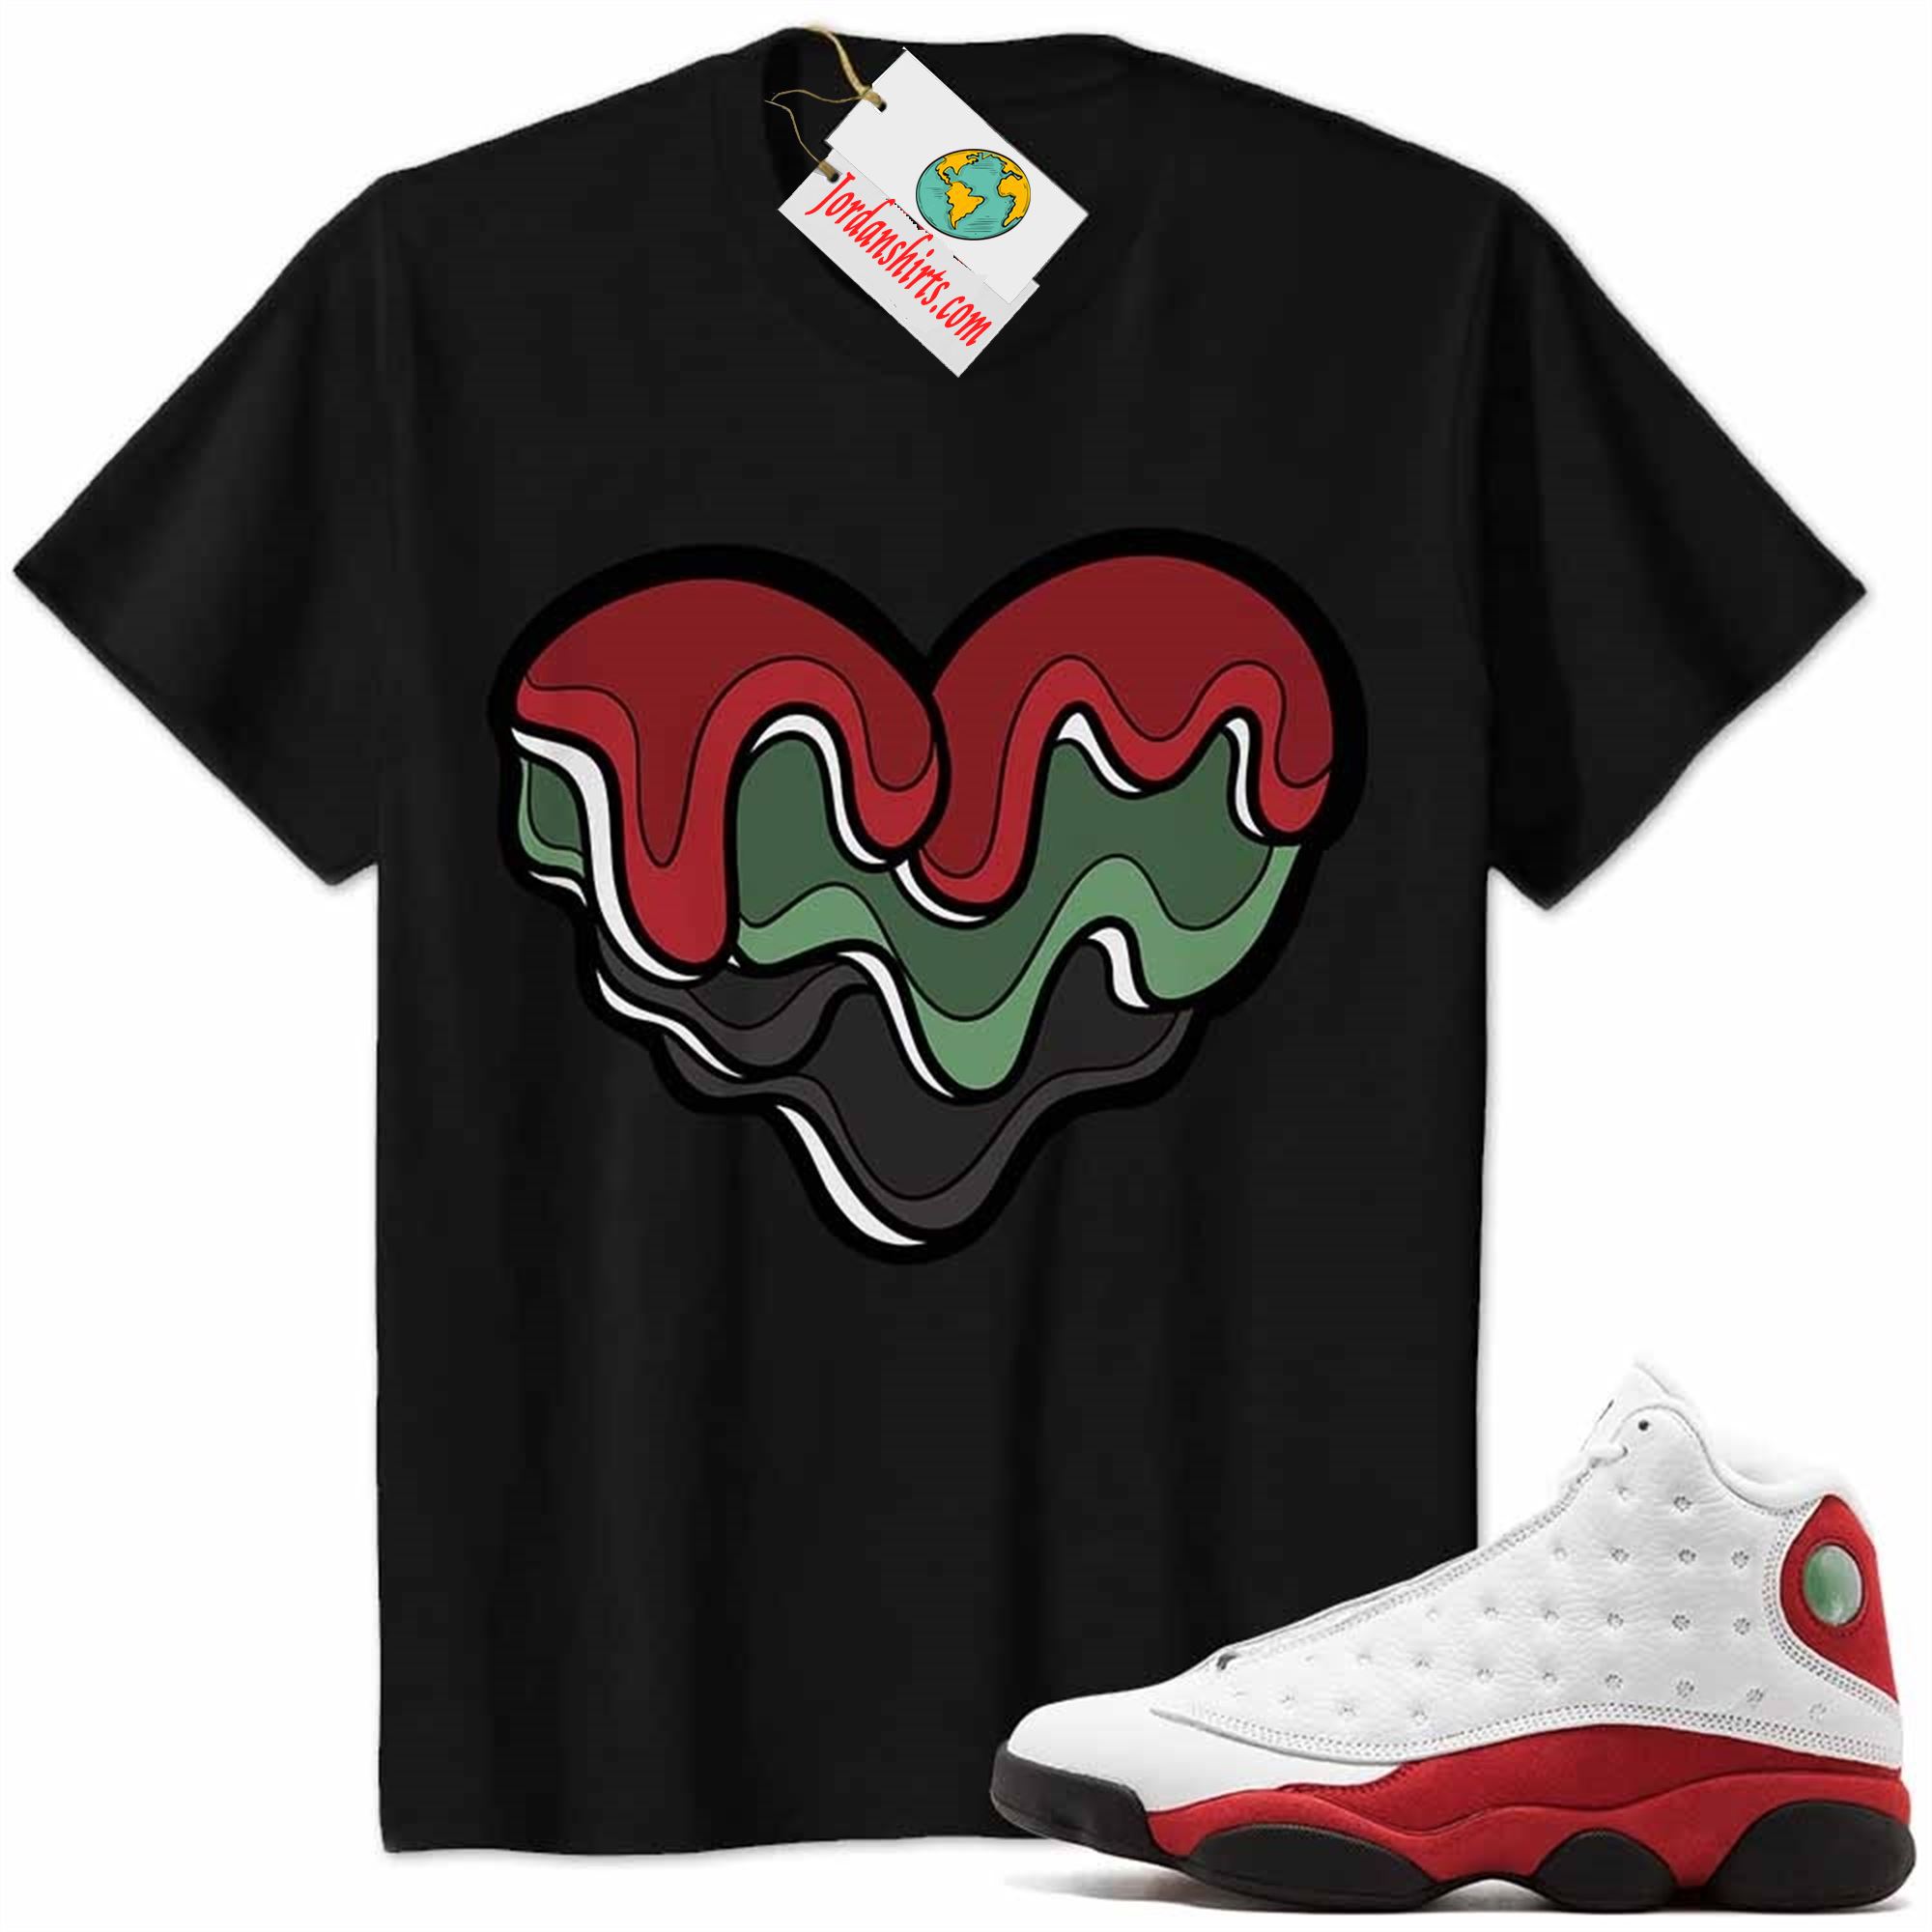 Jordan 13 Shirt, Melt Dripping Heart Black Air Jordan 13 Chicago 13s Plus Size Up To 5xl